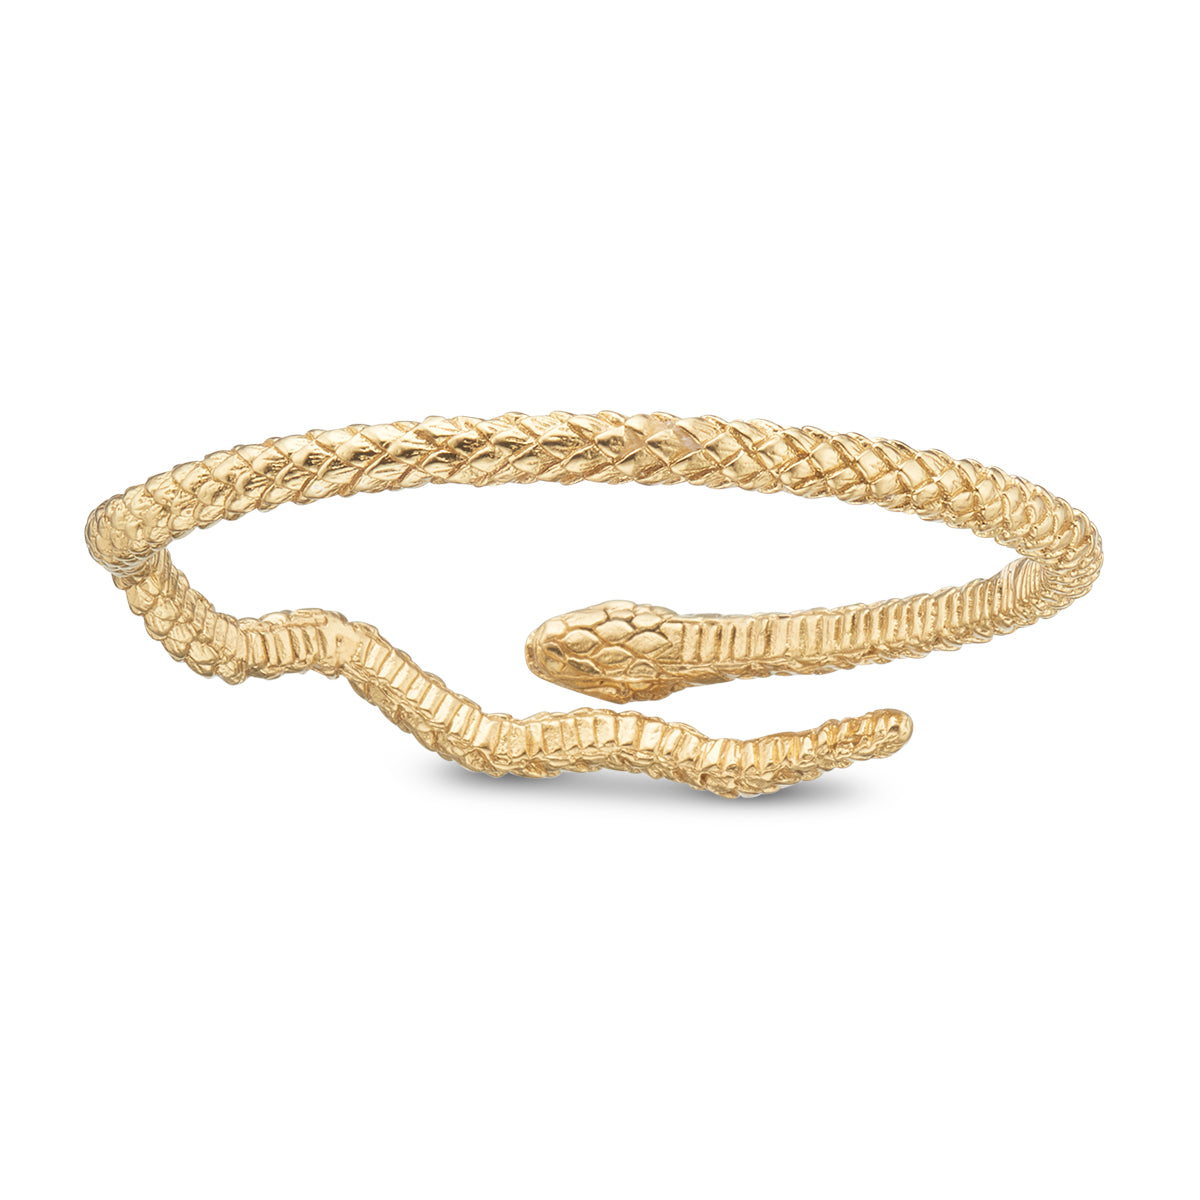 Medusa snake cuff bangle (adjustable)